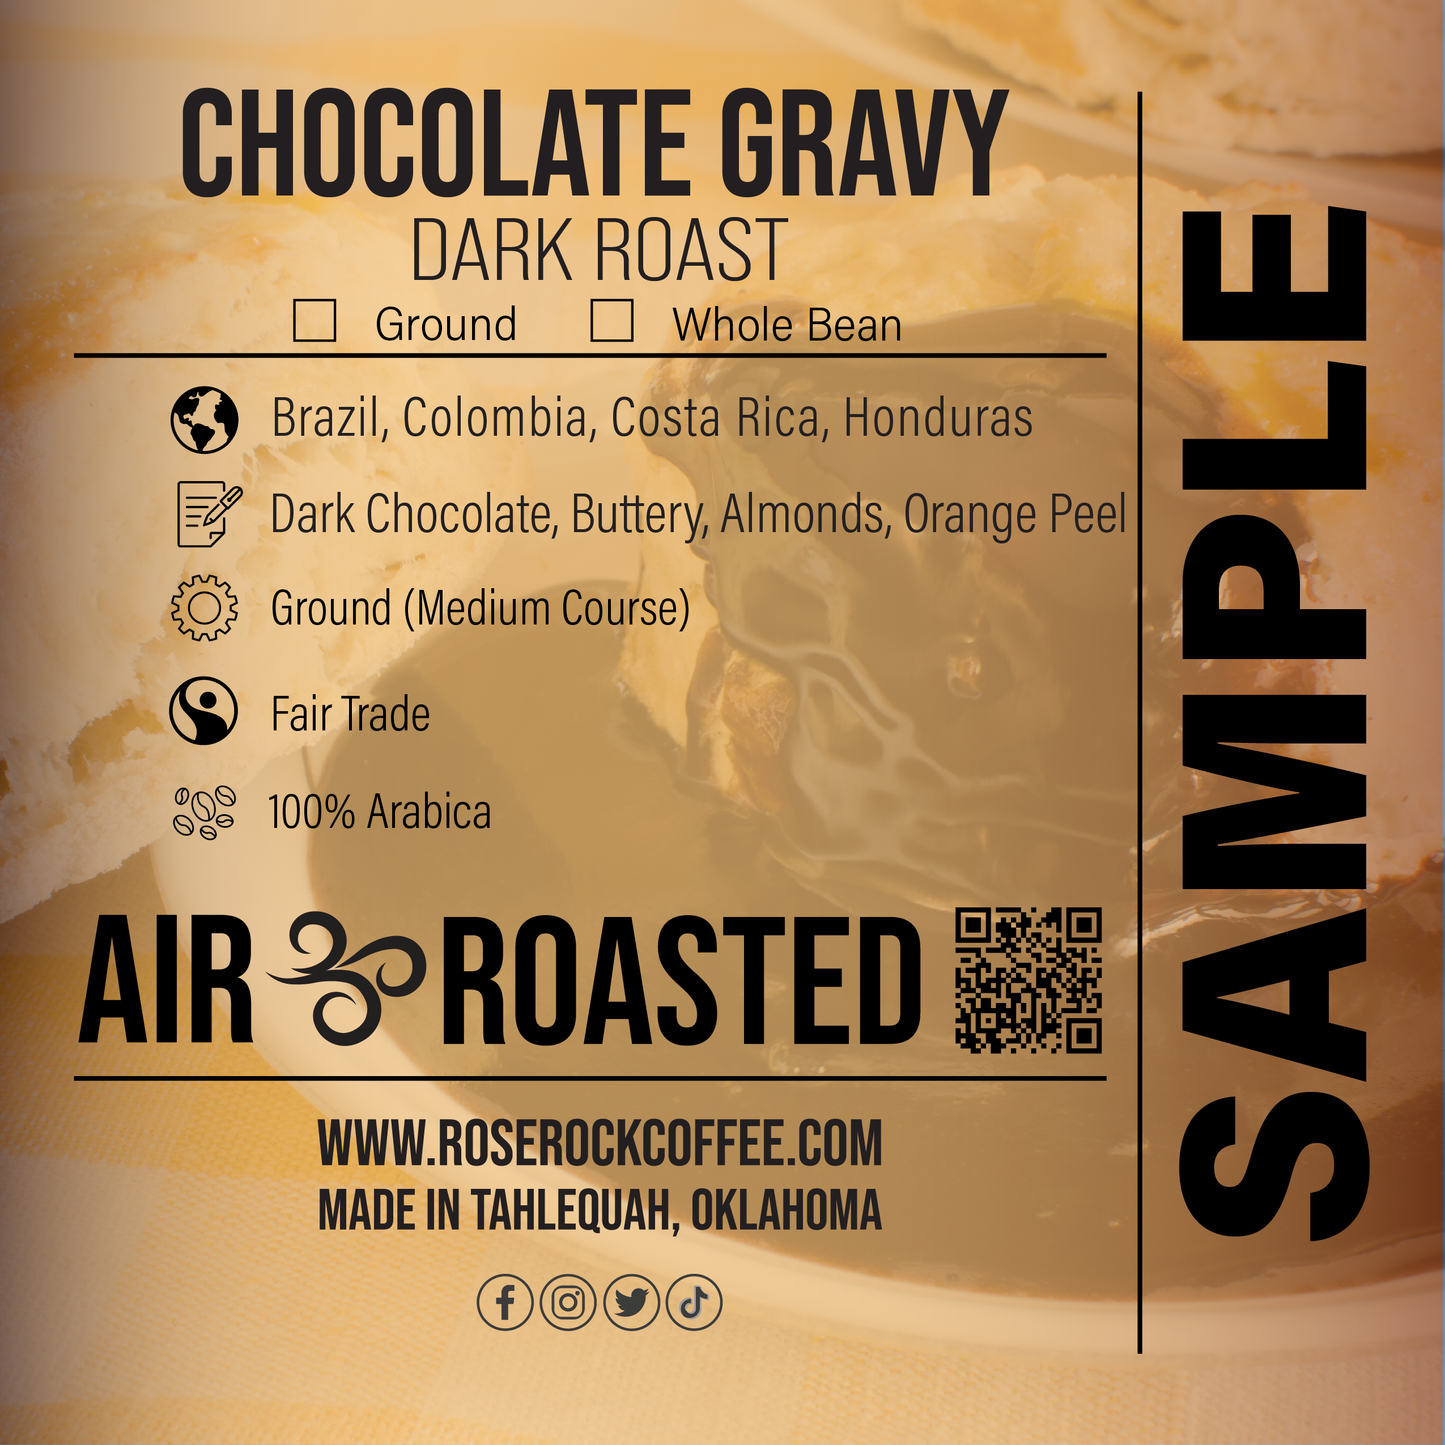 
                  
                    Chocolate Gravy | Whole Bean Coffee | Dark Roast | Rose Rock Coffee | Air Roasted | 10oz | 12oz | 1lb | 5lb | Sample
                  
                